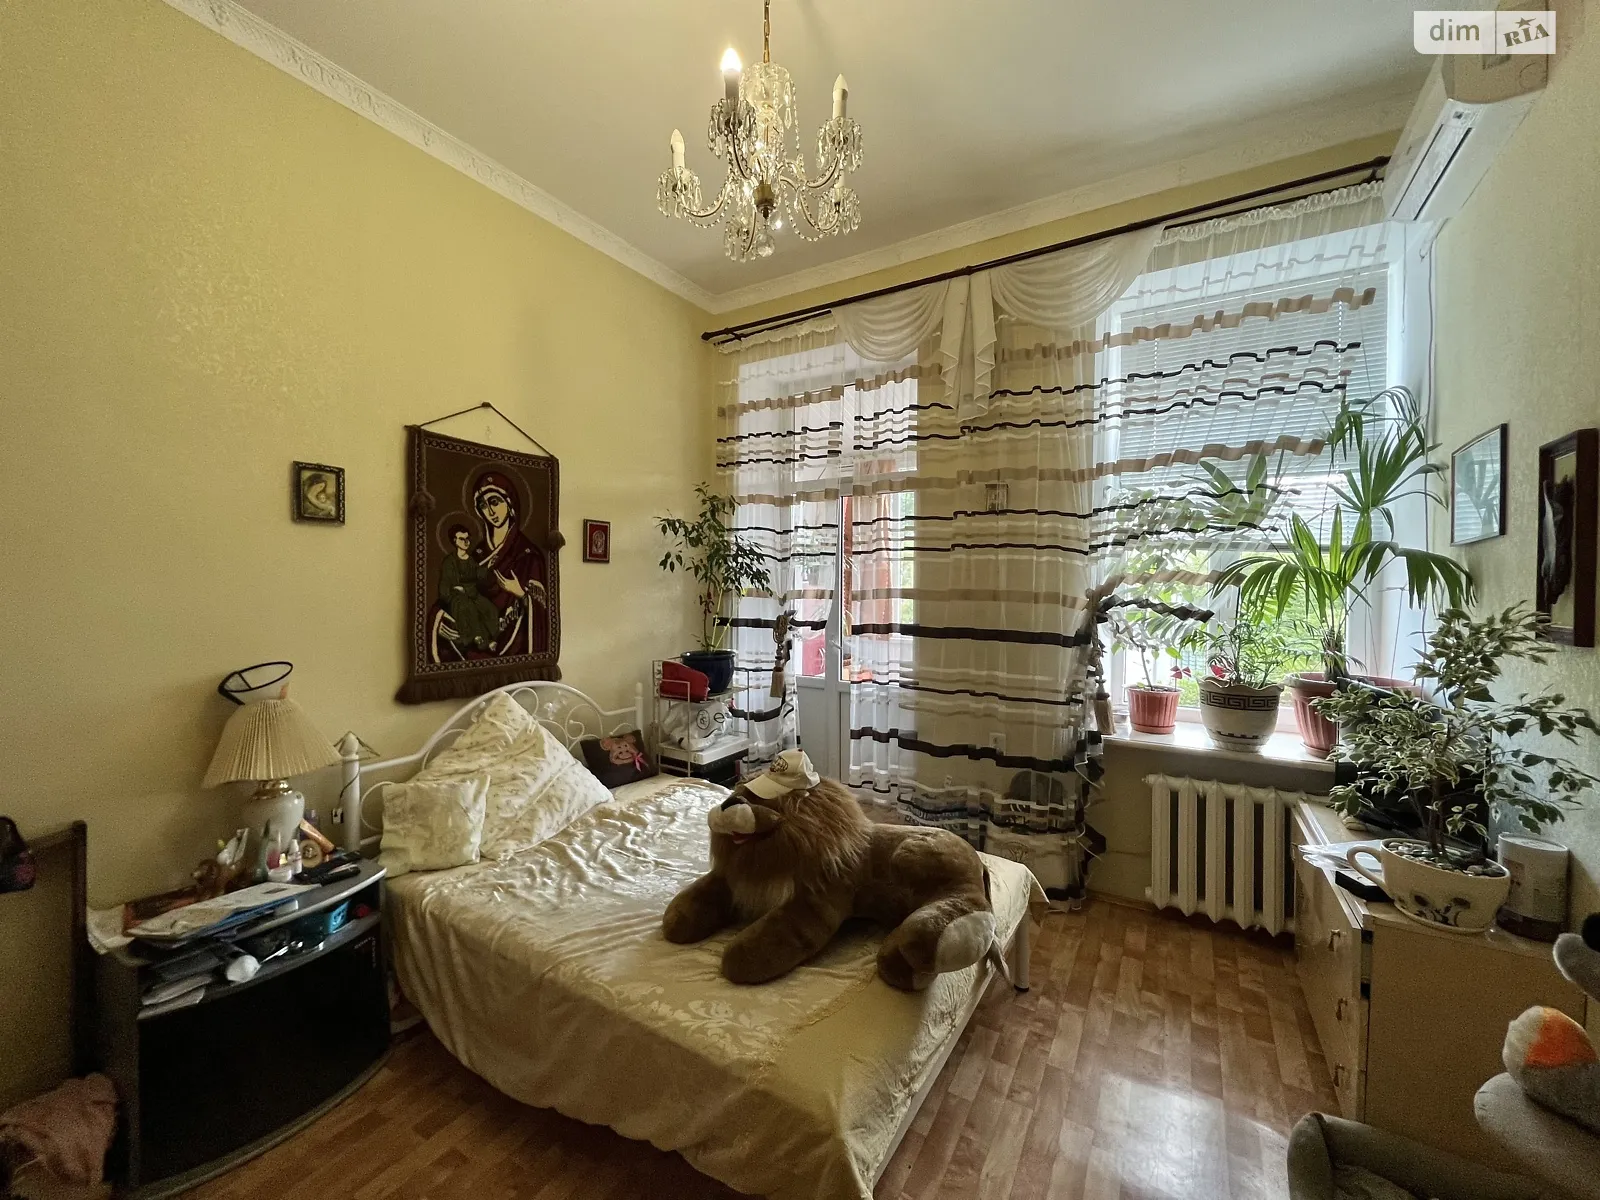 Продается комната 38 кв. м в Одессе, цена: 20000 $ - фото 1